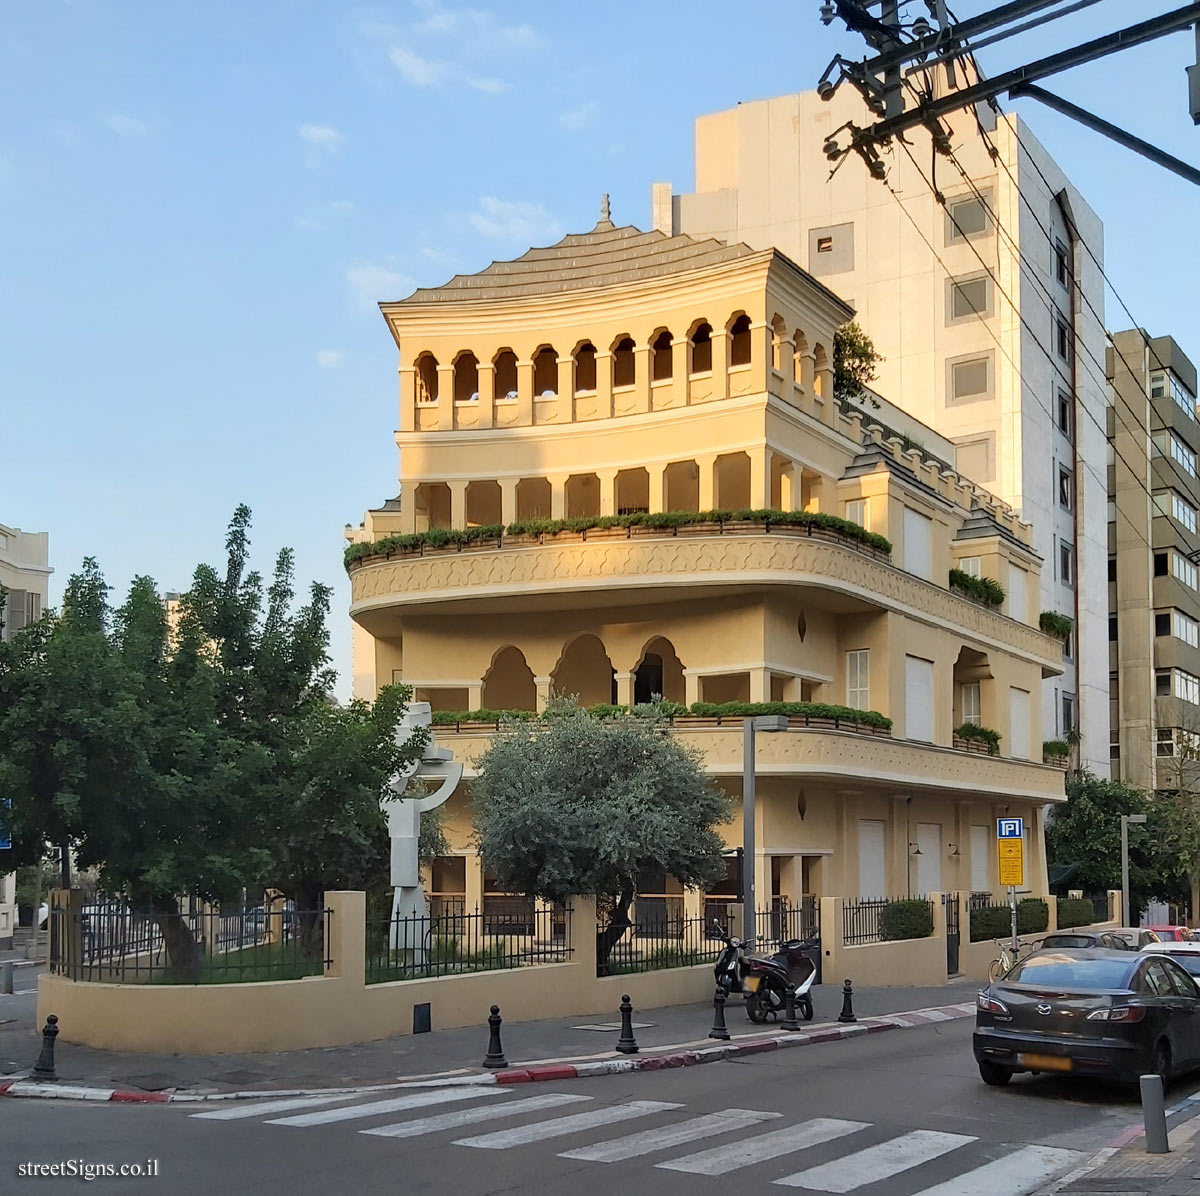 Tel Aviv -  The pagoda house - Nachmani St 12, Tel Aviv-Yafo, Israel